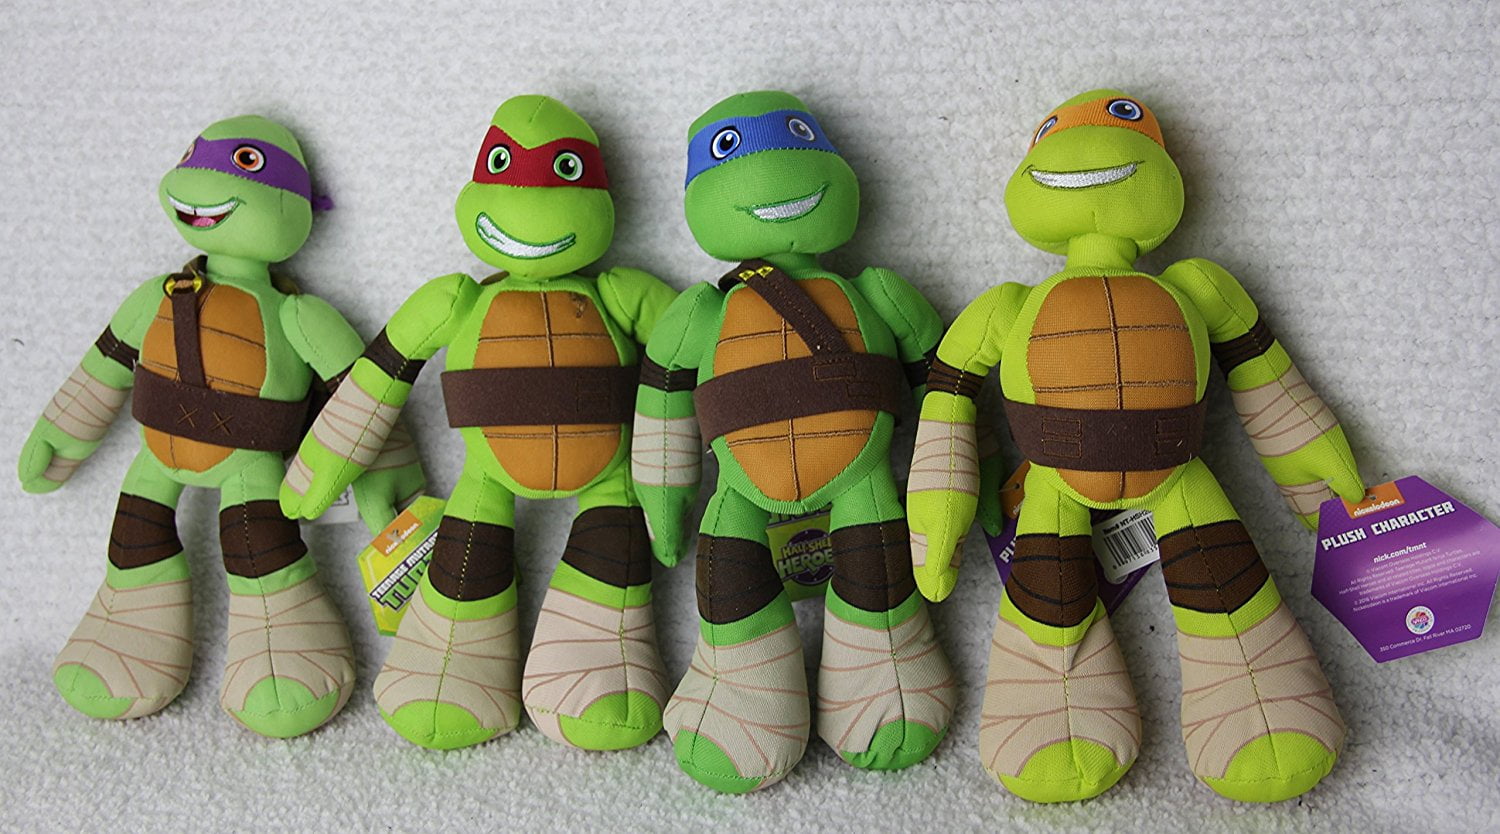 Nickelodeon Ninja Turtles Plush Set Stuffed Animal Teenage Mutant Kids Gift Toy 